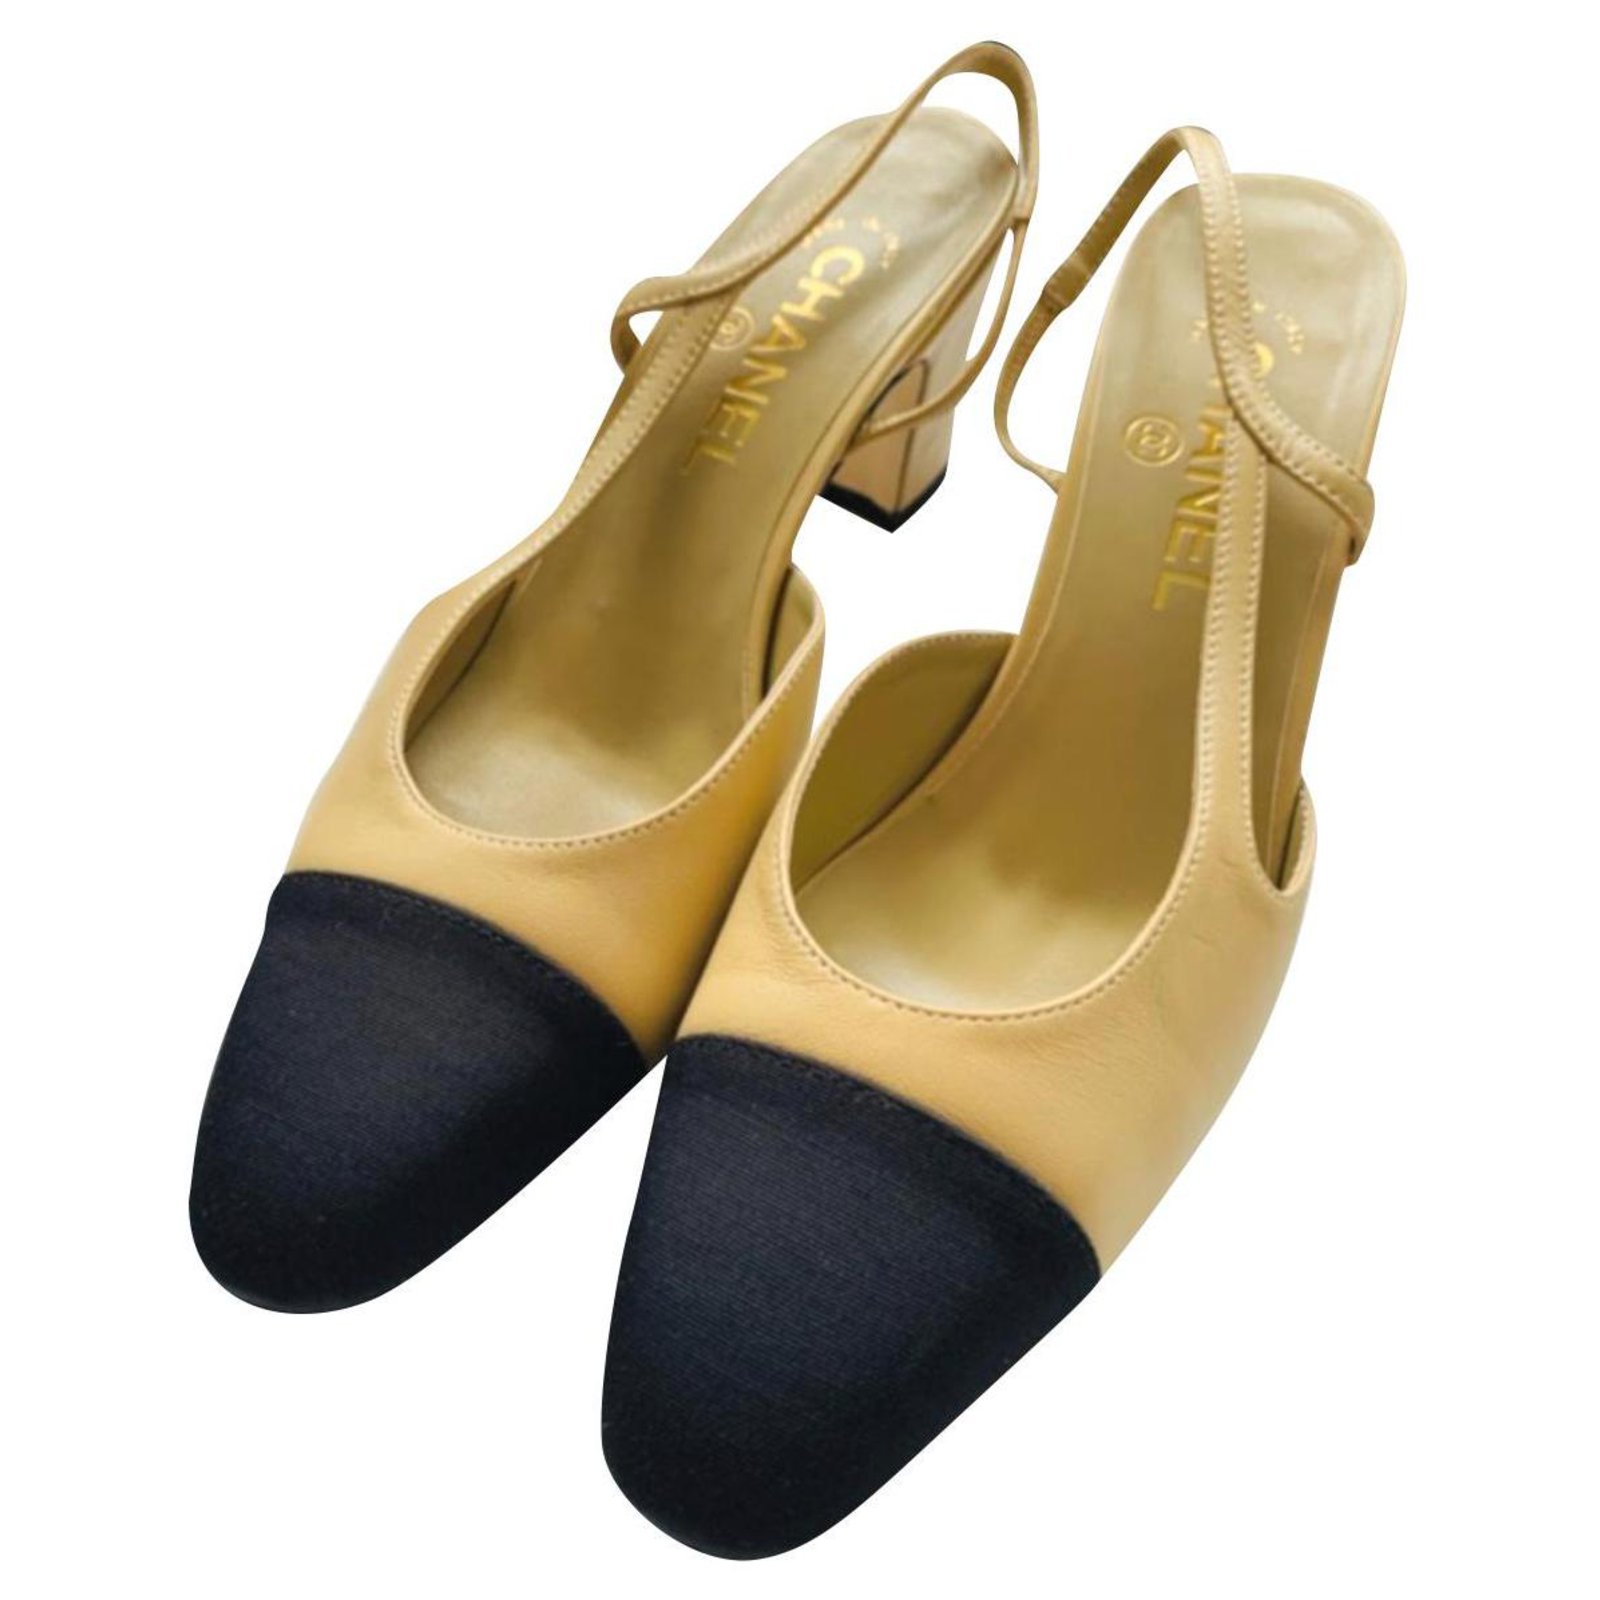 Leather heels Chanel Beige size 38 EU in Leather - 36332858